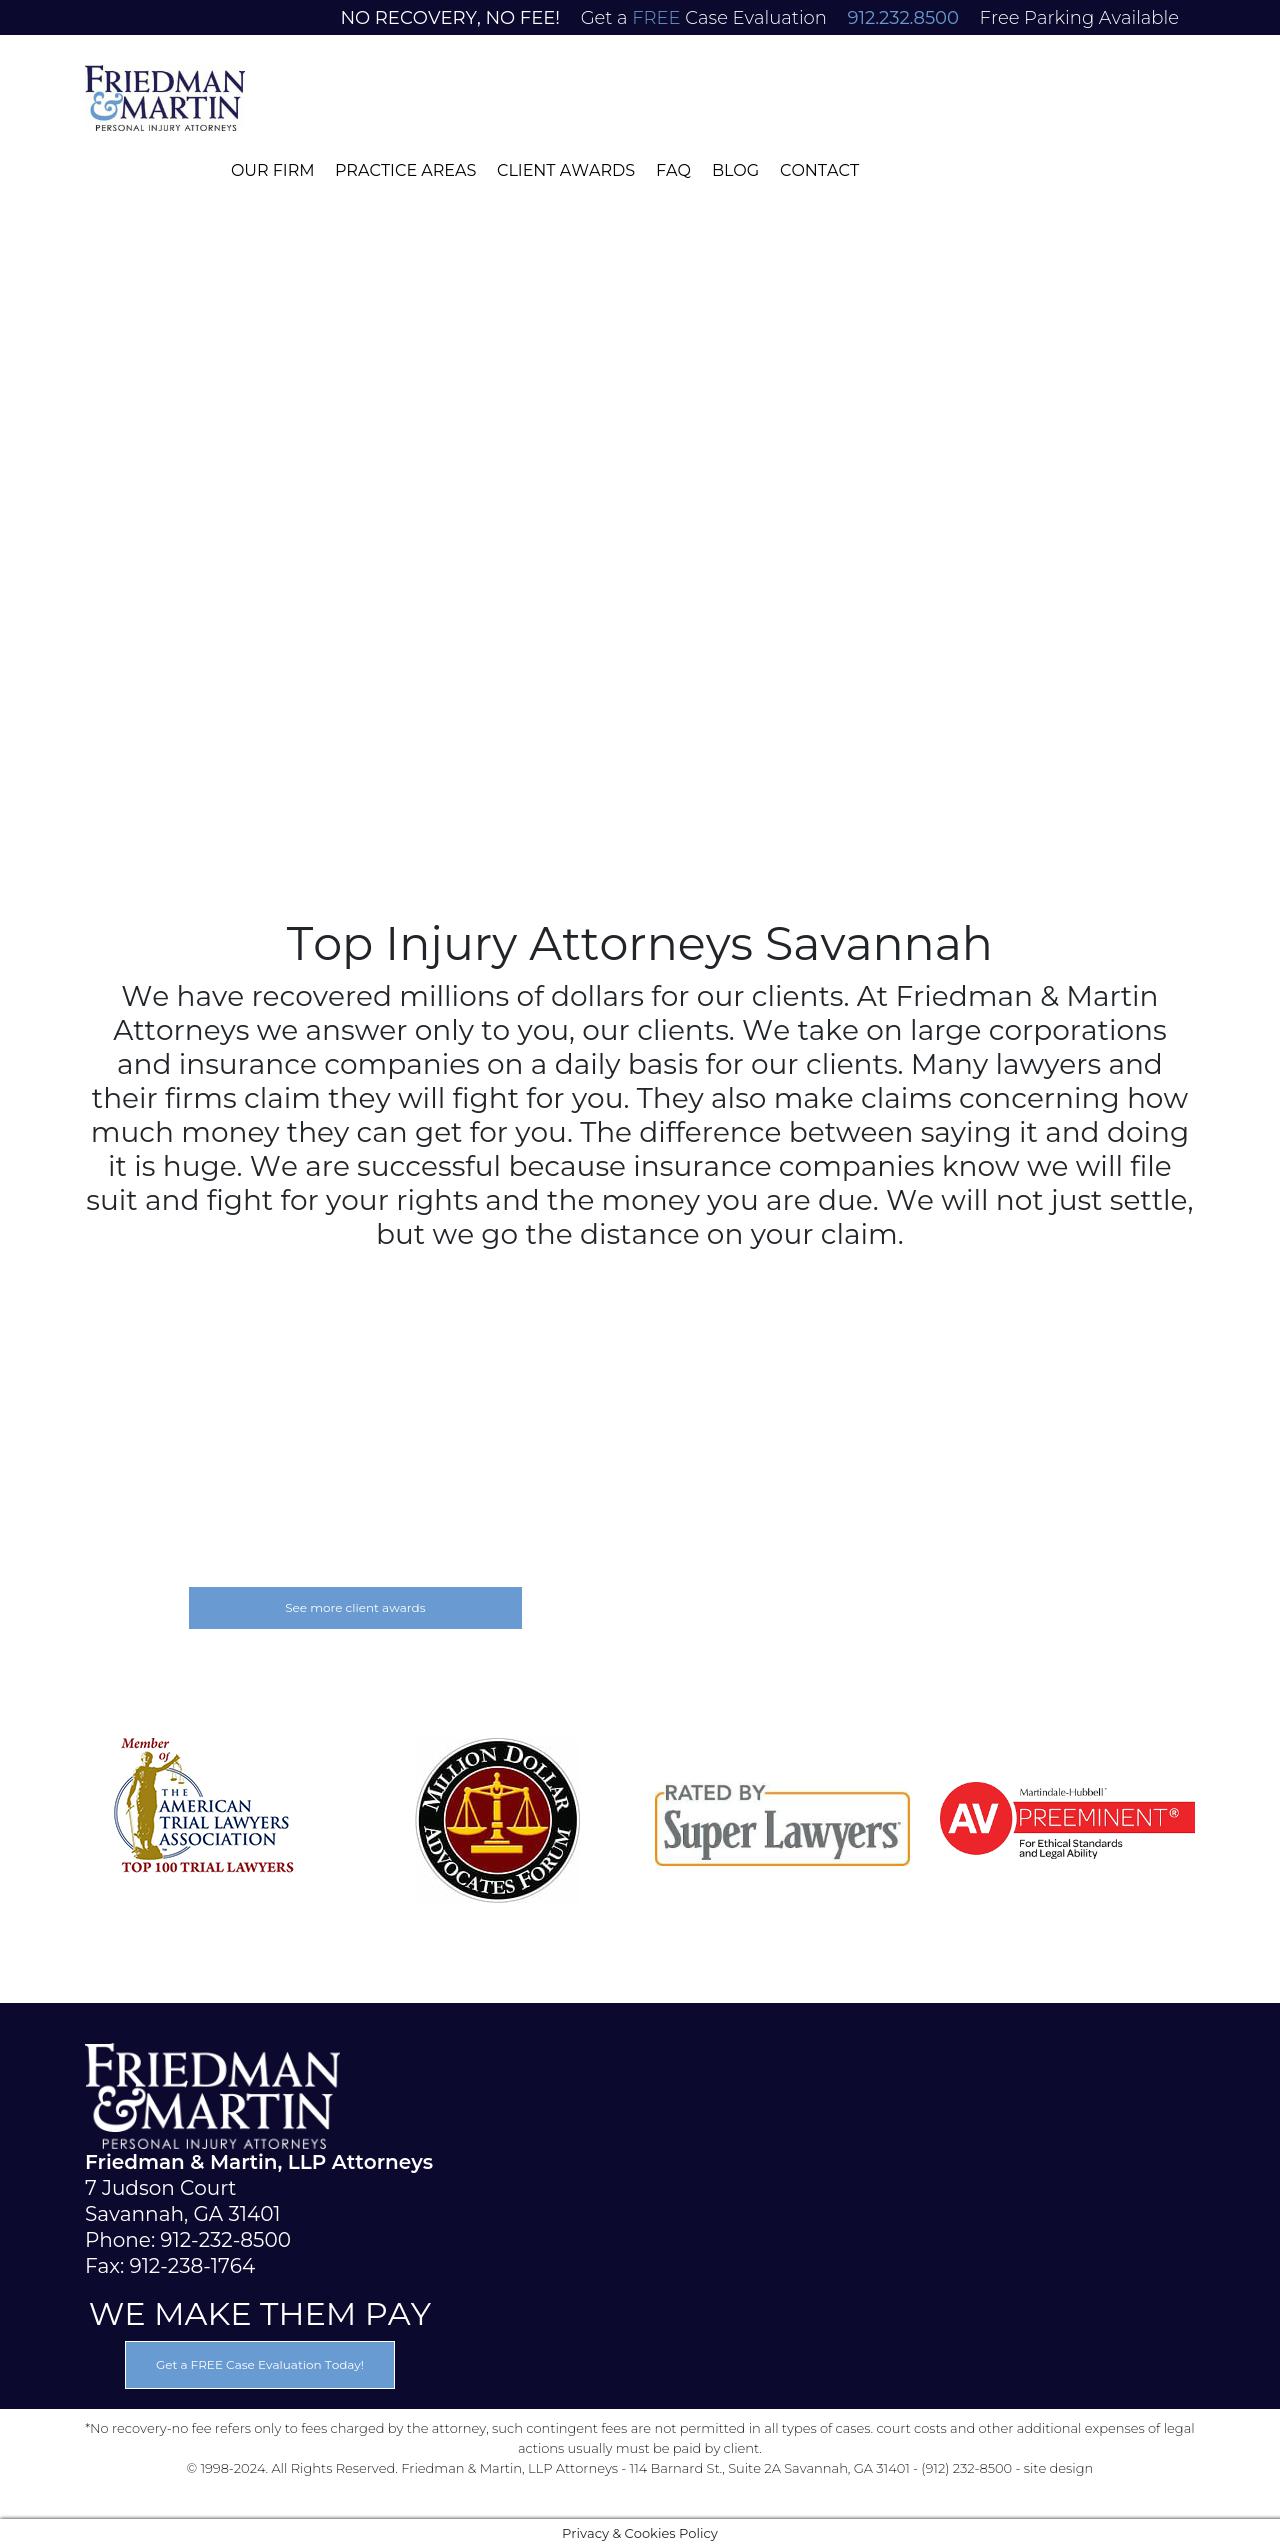 Friedman & Martin, LLP - Savannah GA Lawyers